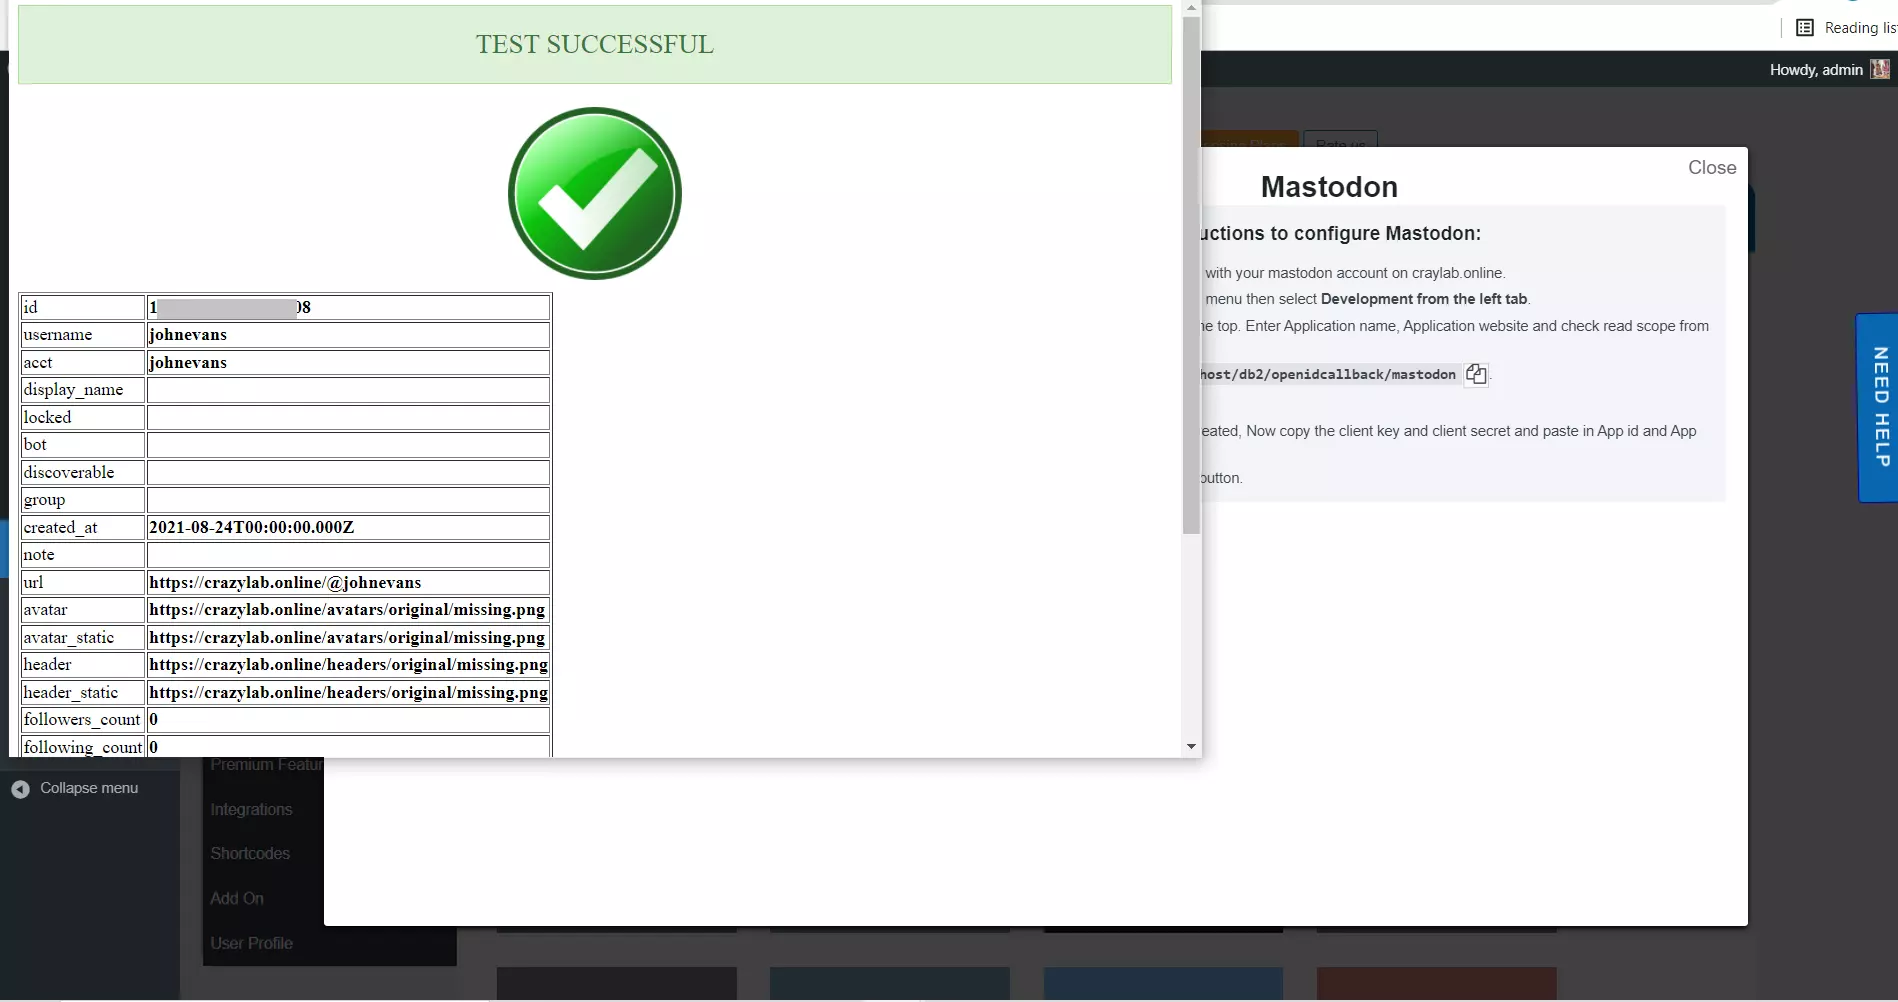 Test configuration successful for mastodon social login